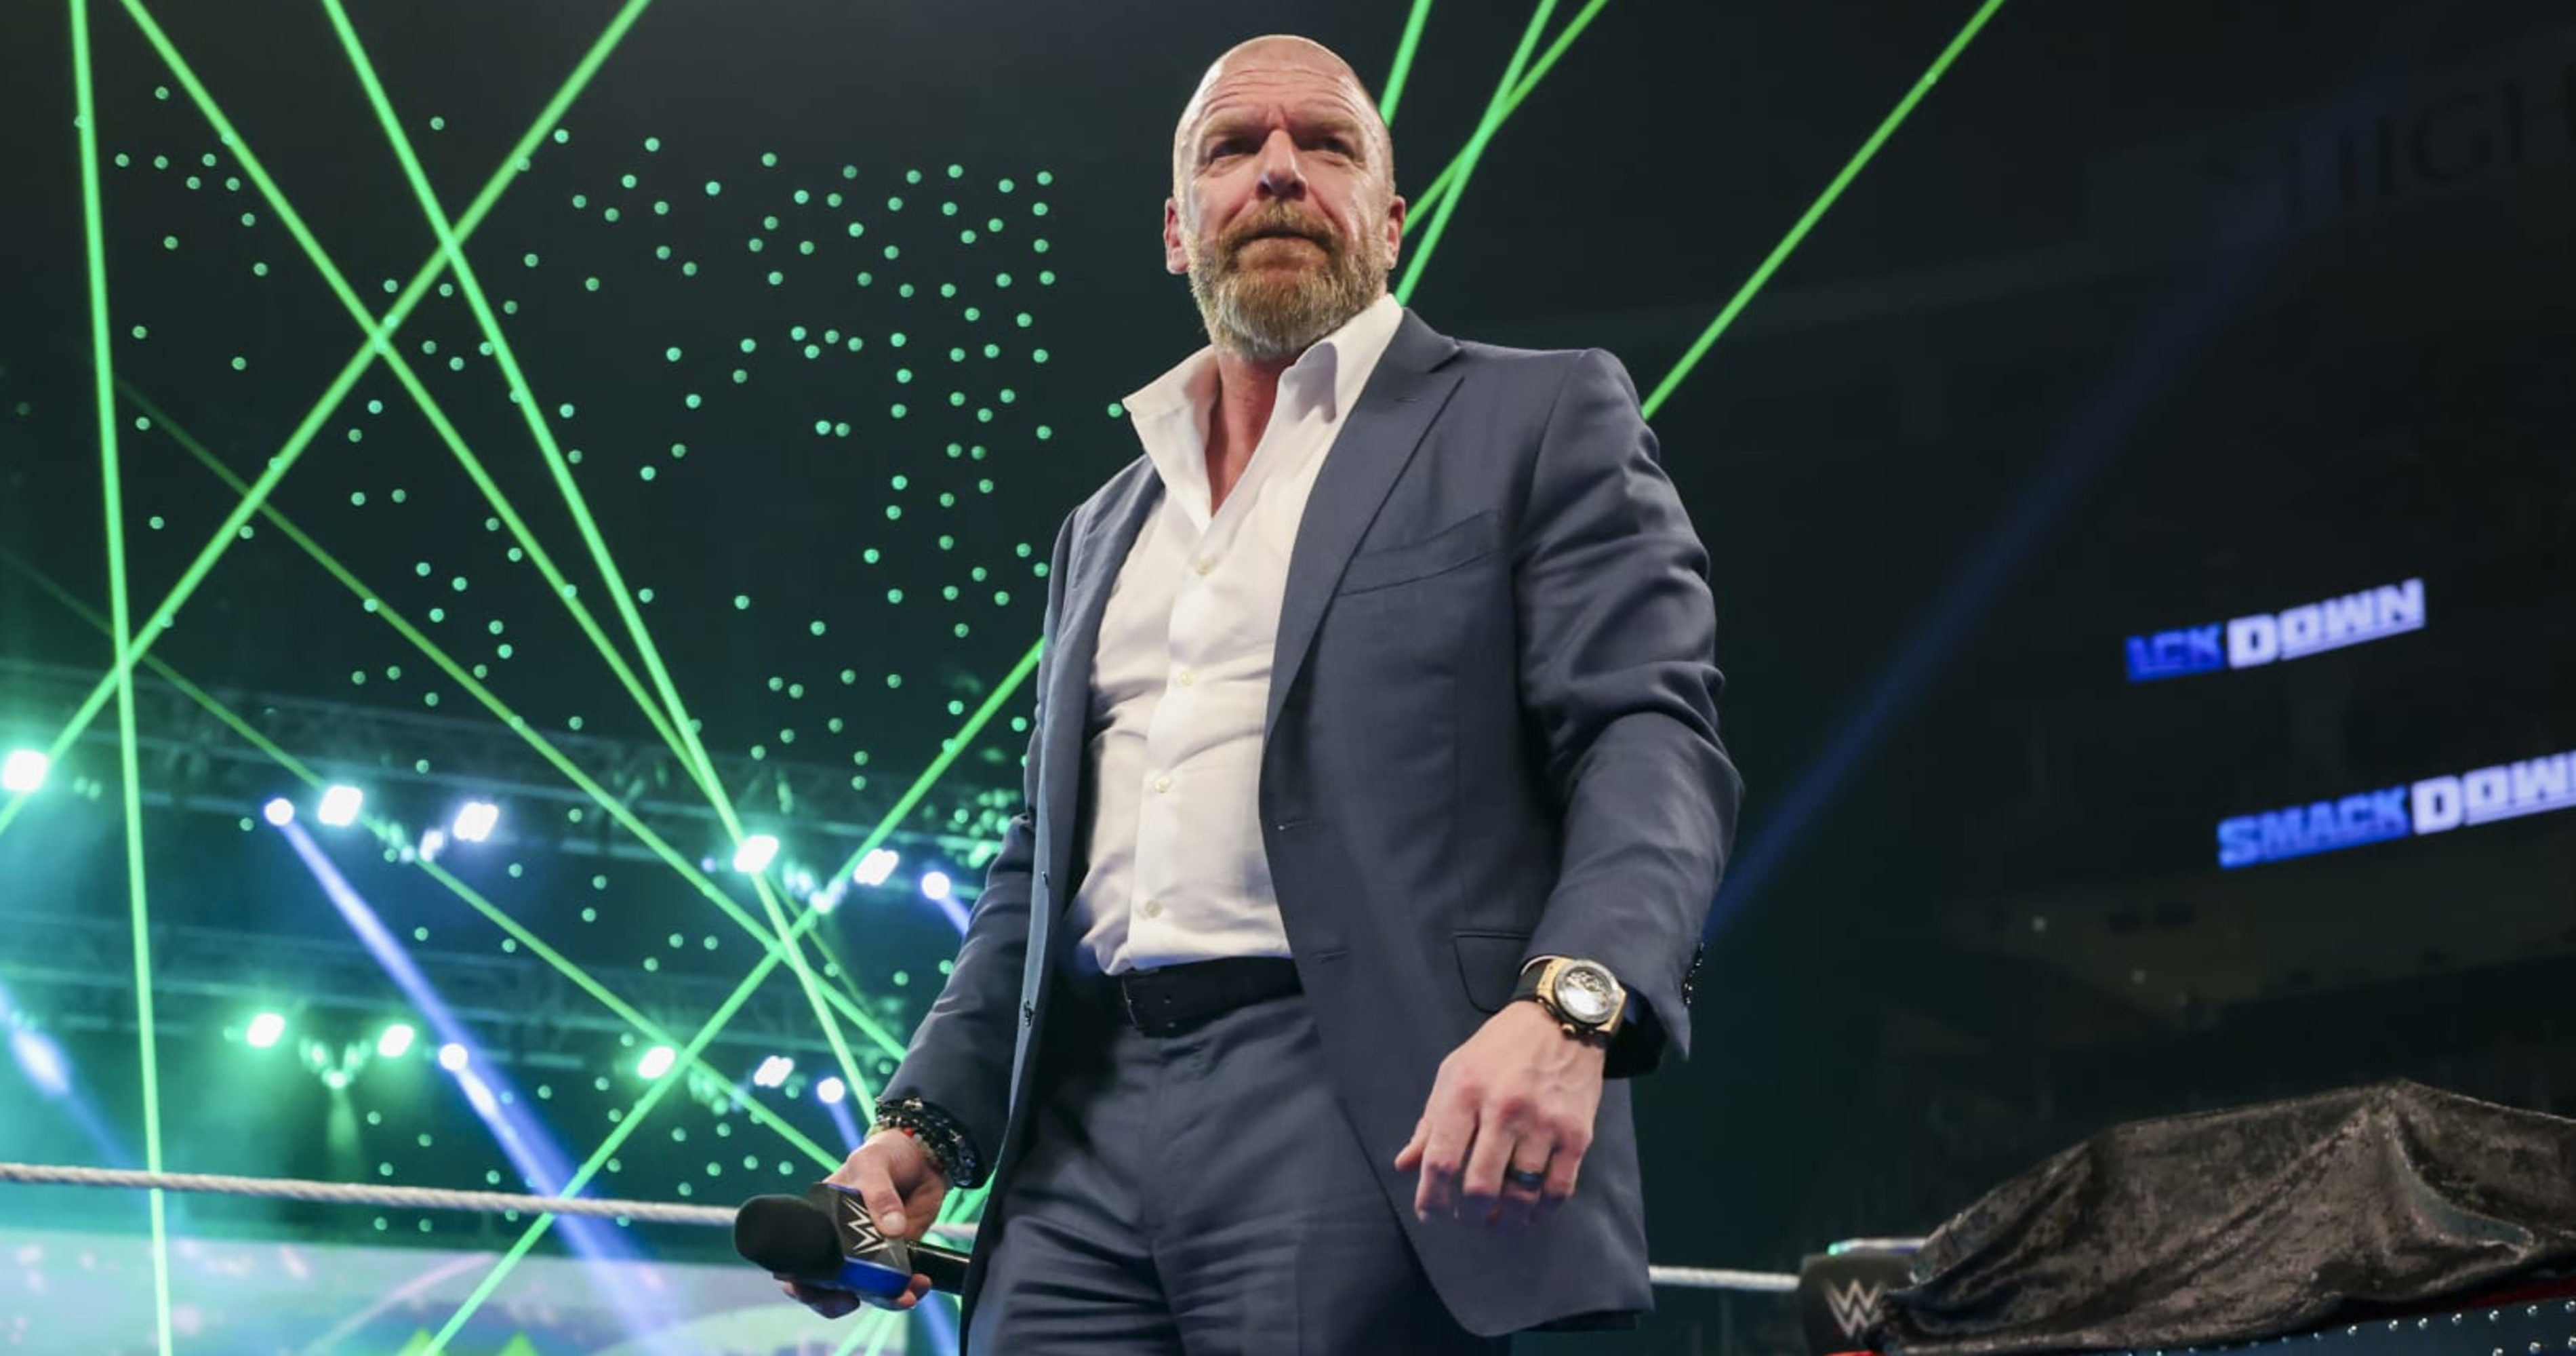 Triple H on London Mayor's Pledge to Pursue Hosting WWE Wrestlemania: 'Let's Talk'